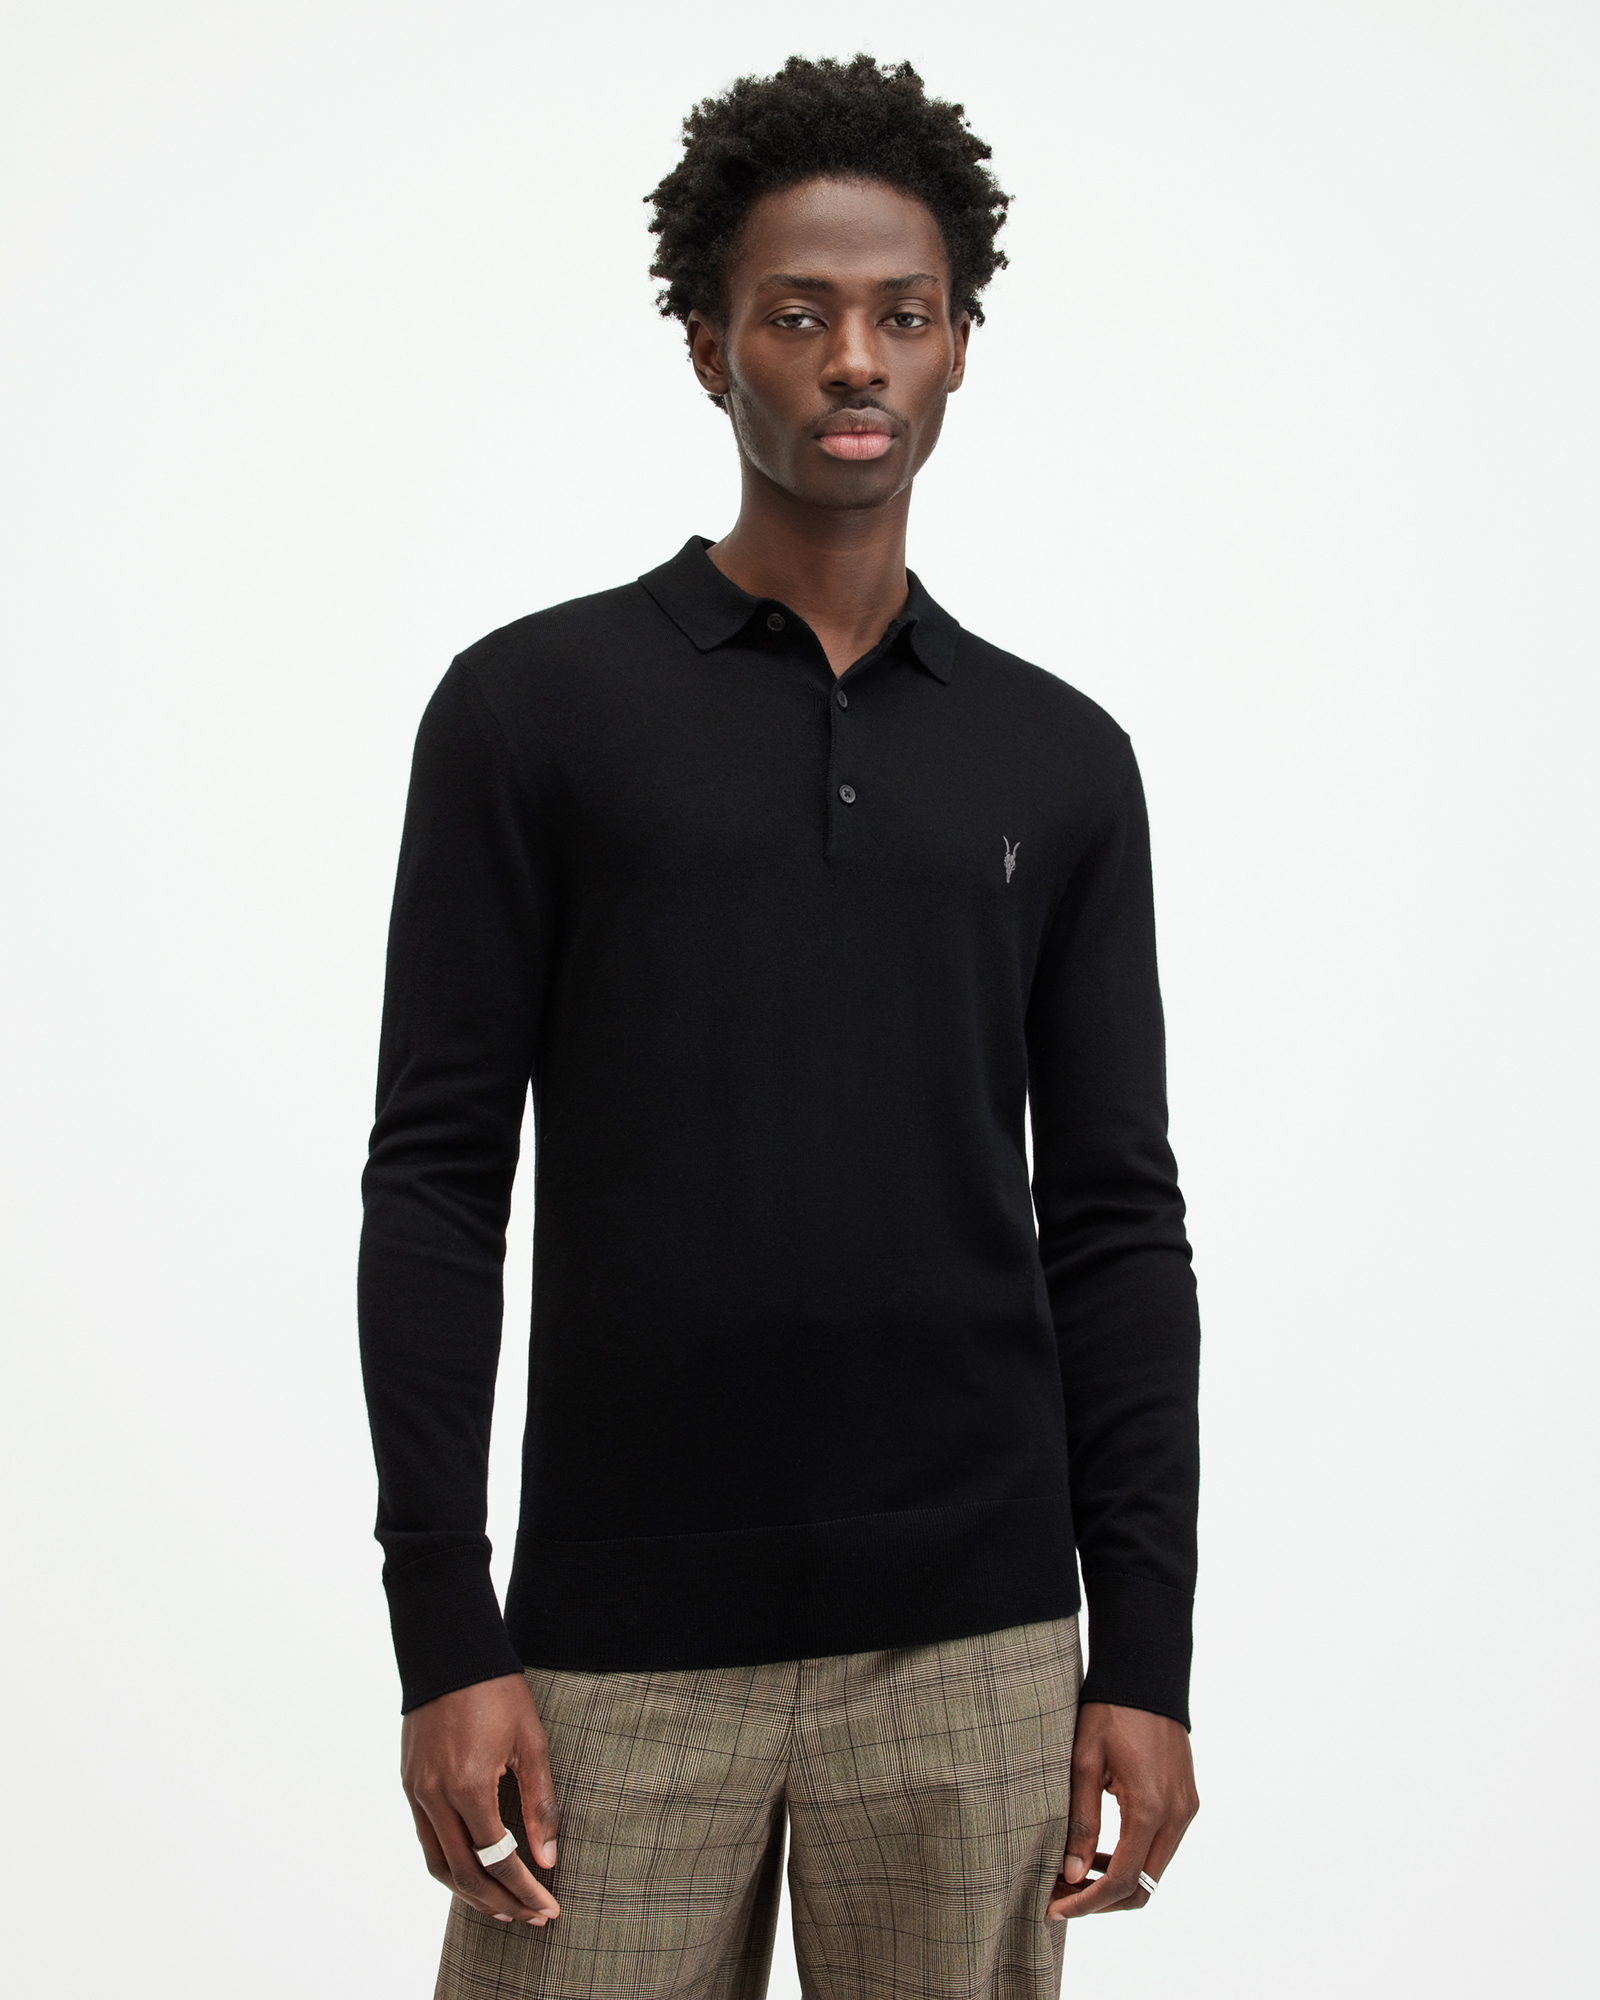 AllSaints Men's Merino Wool Lightweight Mode Long Sleeve Polo Shirt, Black